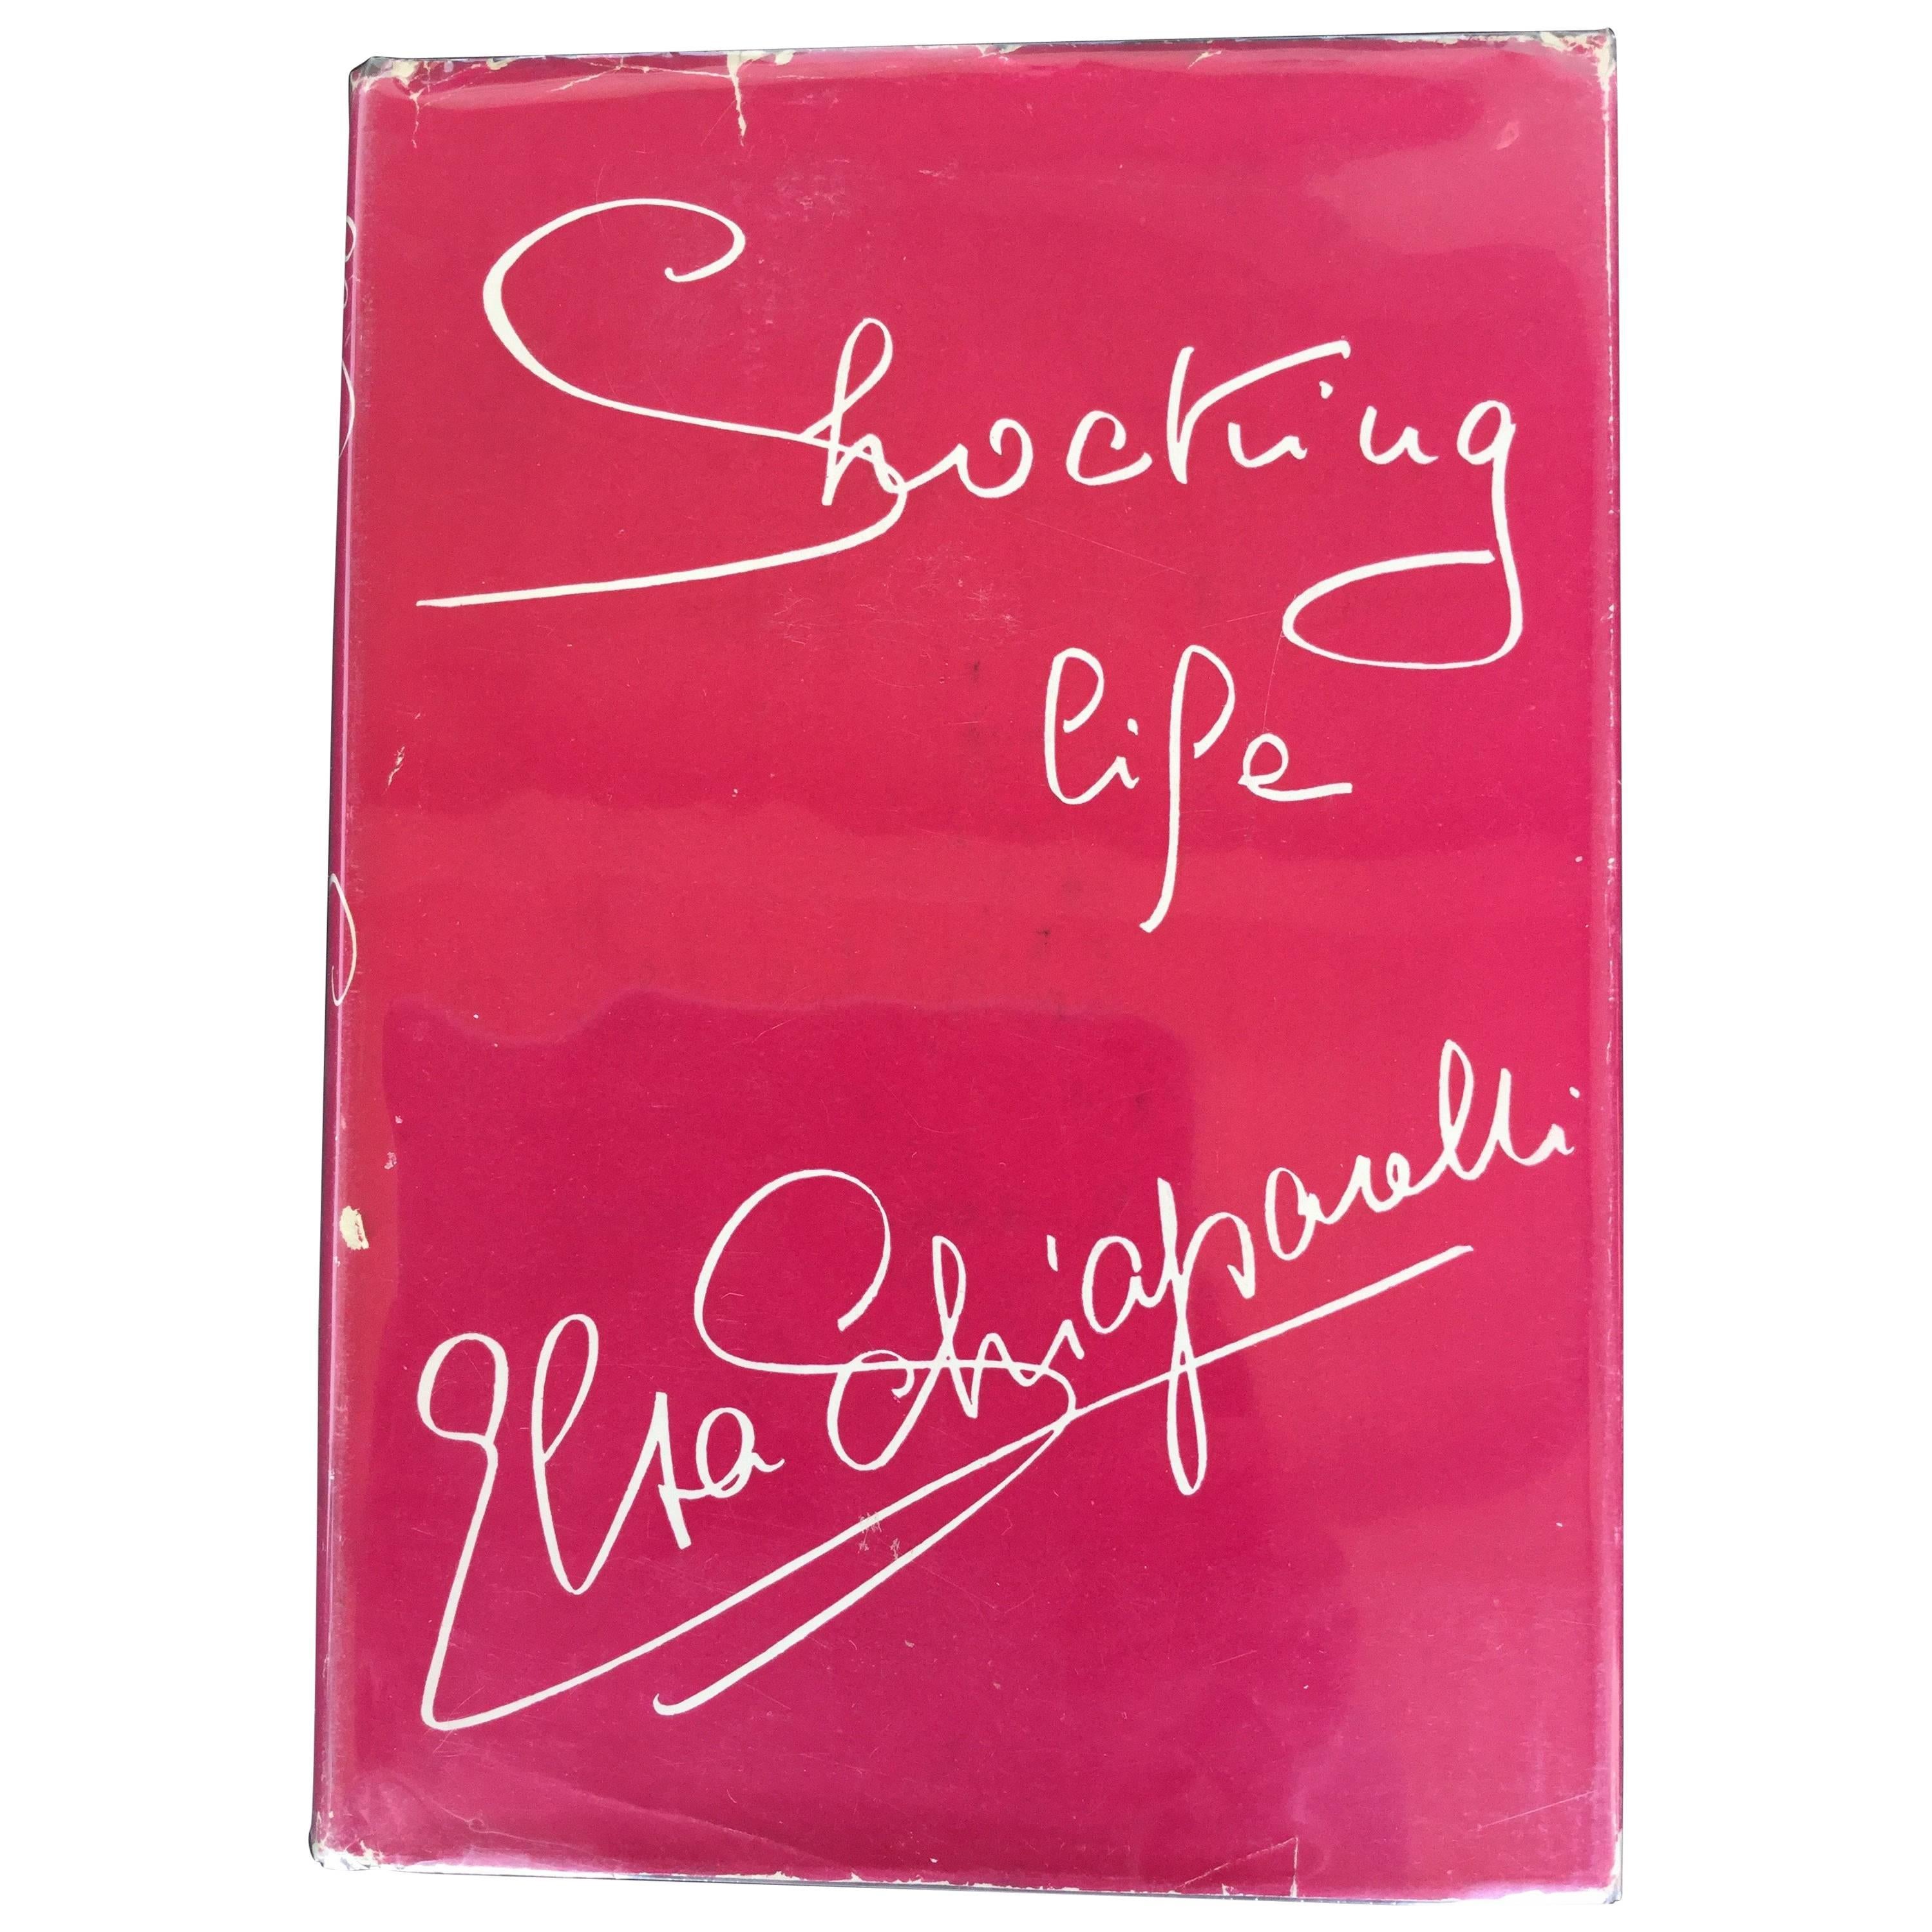 Shocking Life. The autobiography of Elsa Schaiparelli. 1st Edition. 1954